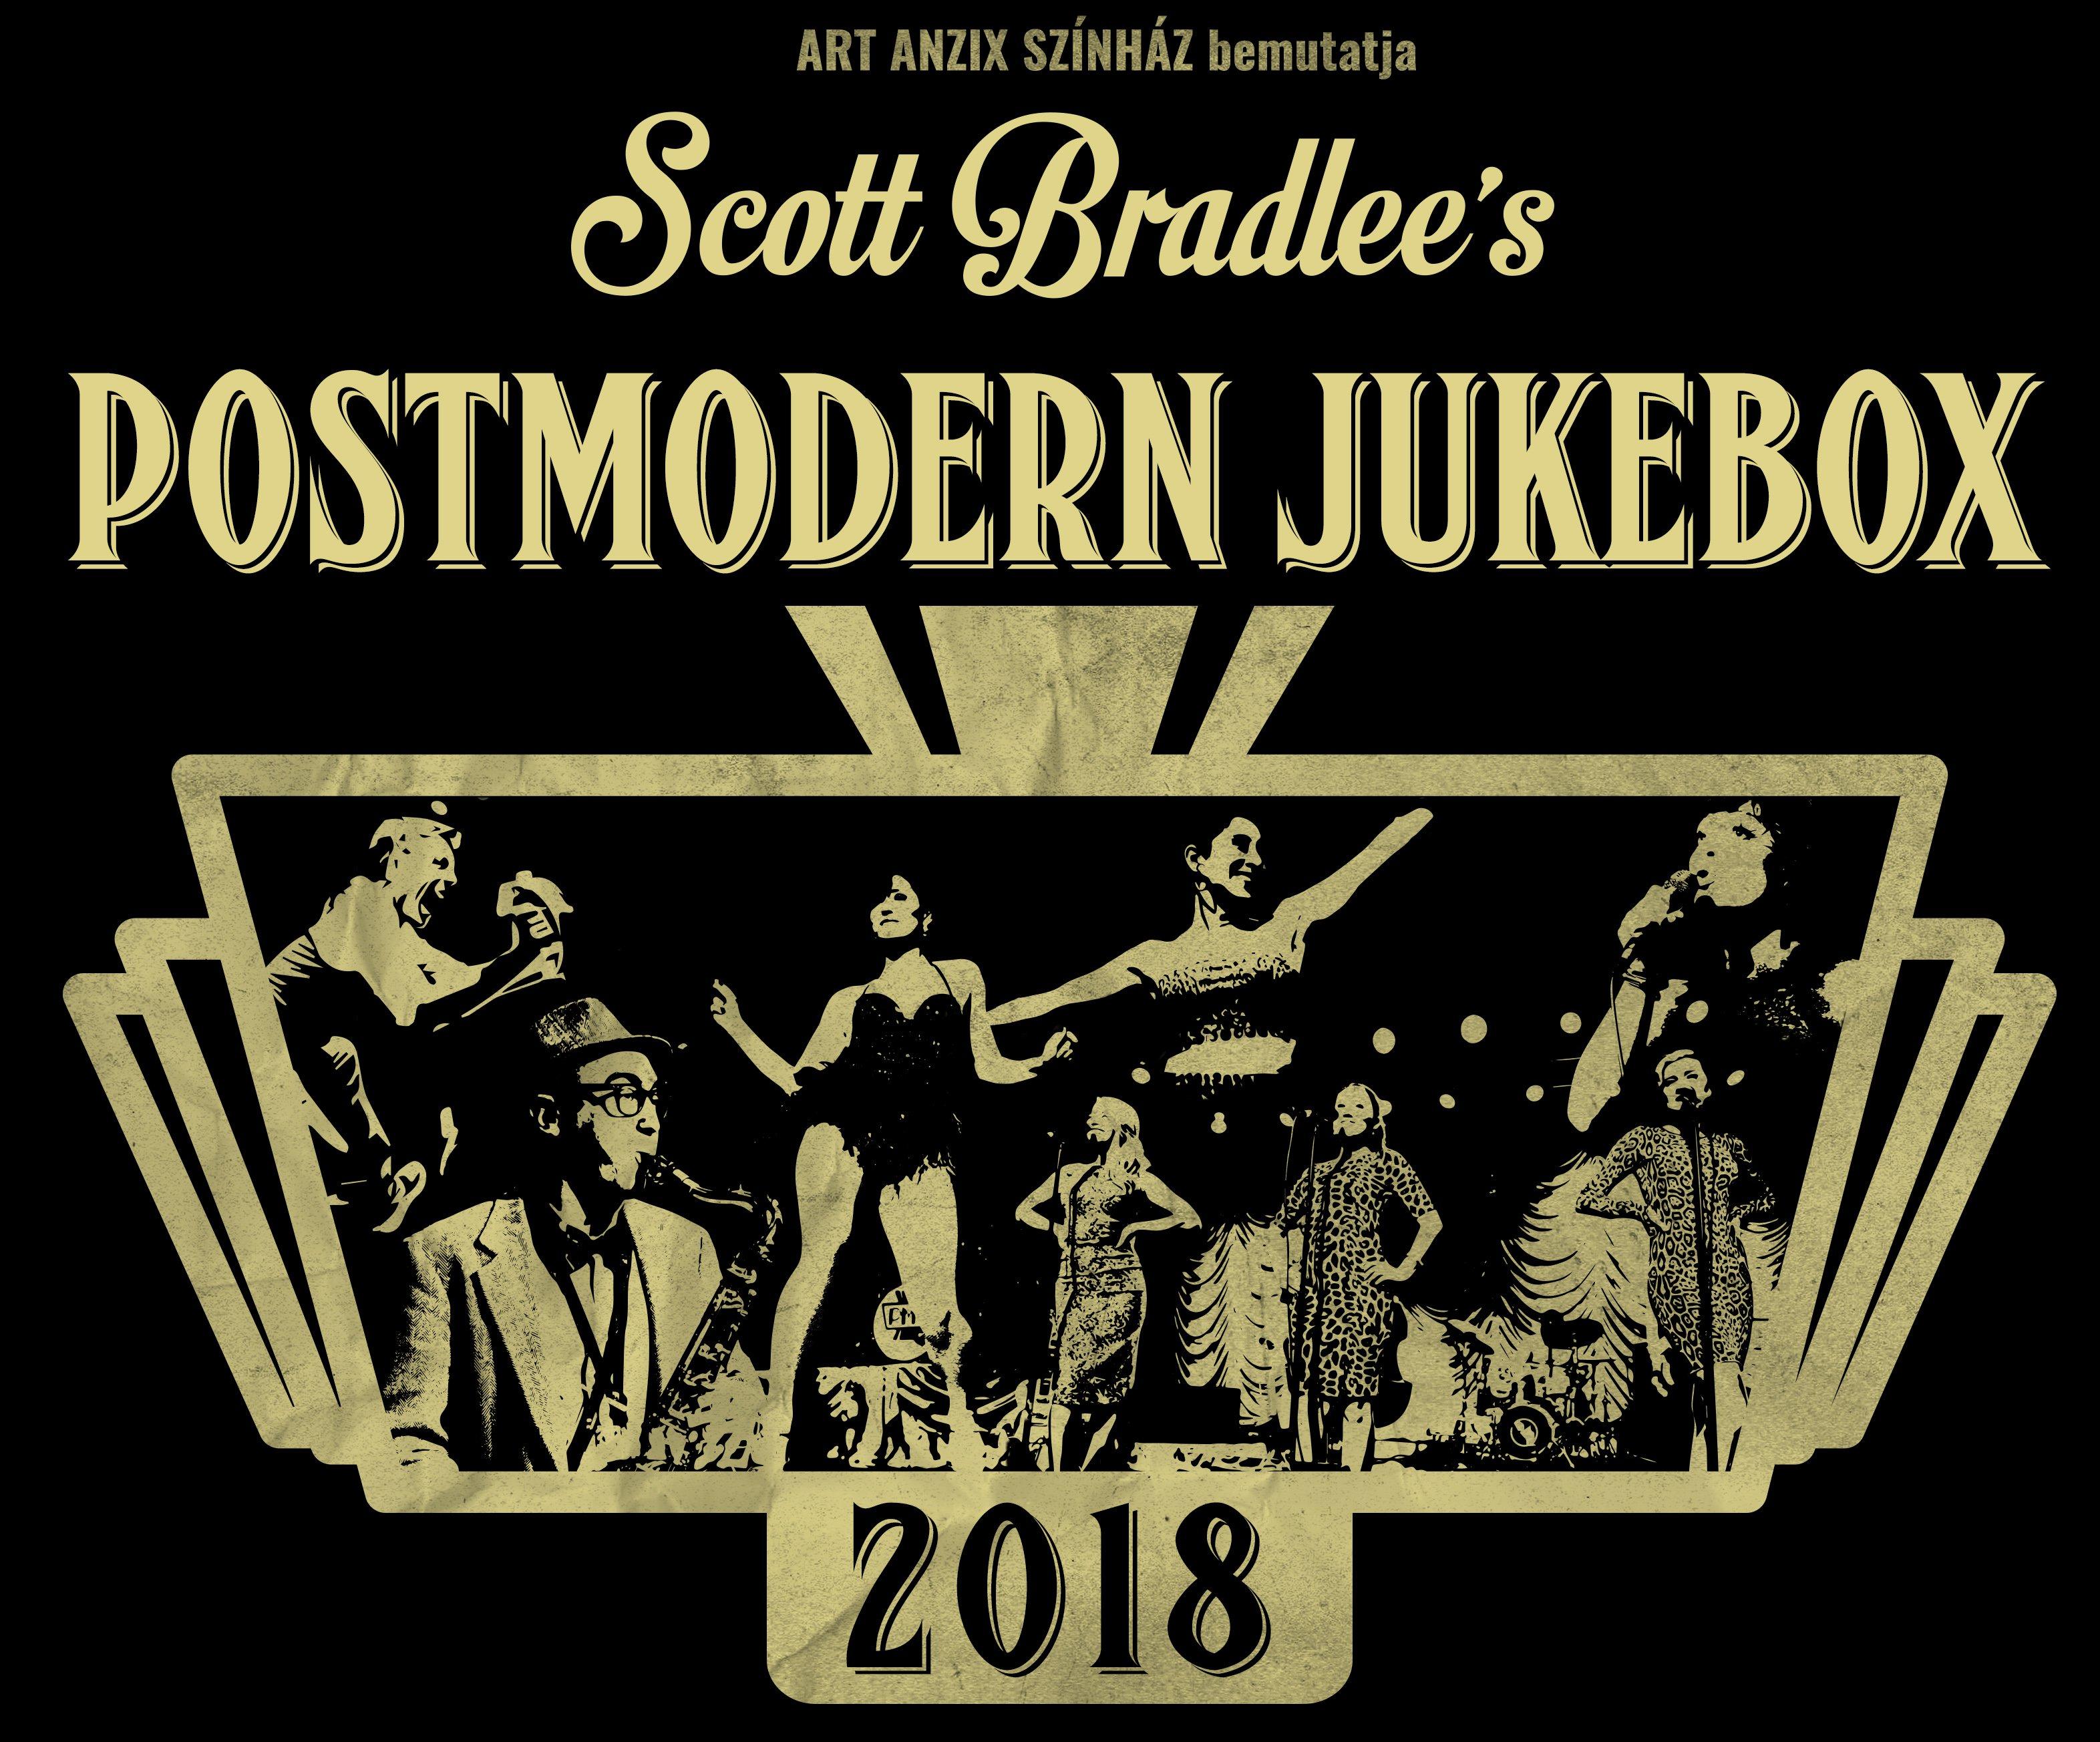 Scott Bradlee’s 'Postmodern Jukebox', Budapest Arena, 17 May